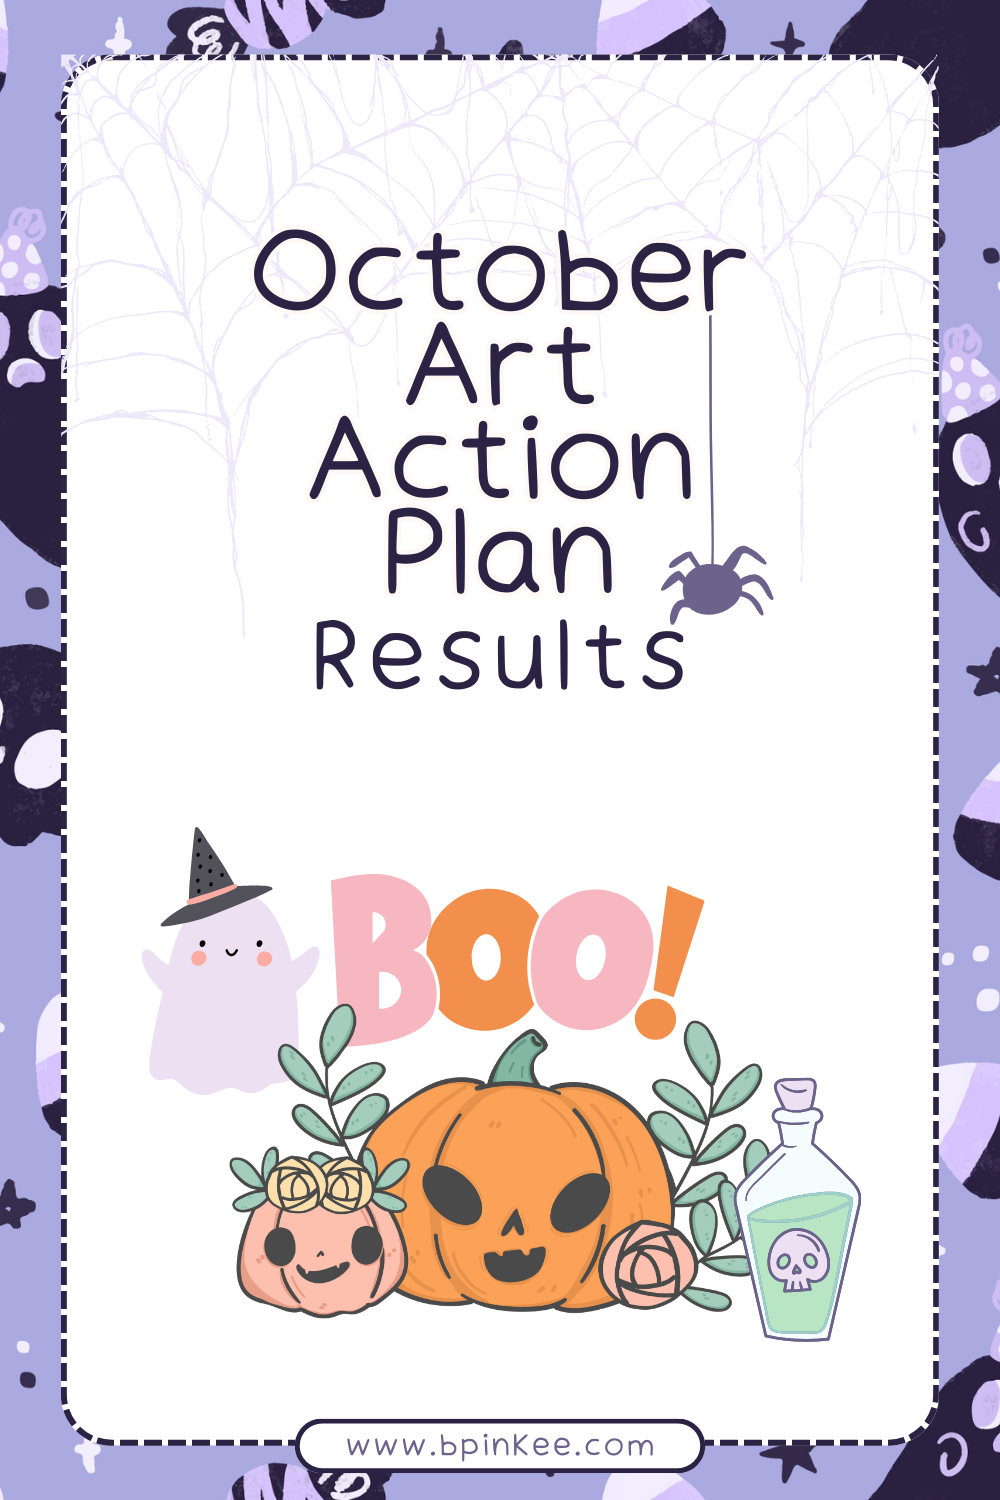 October Art Action Plan Results